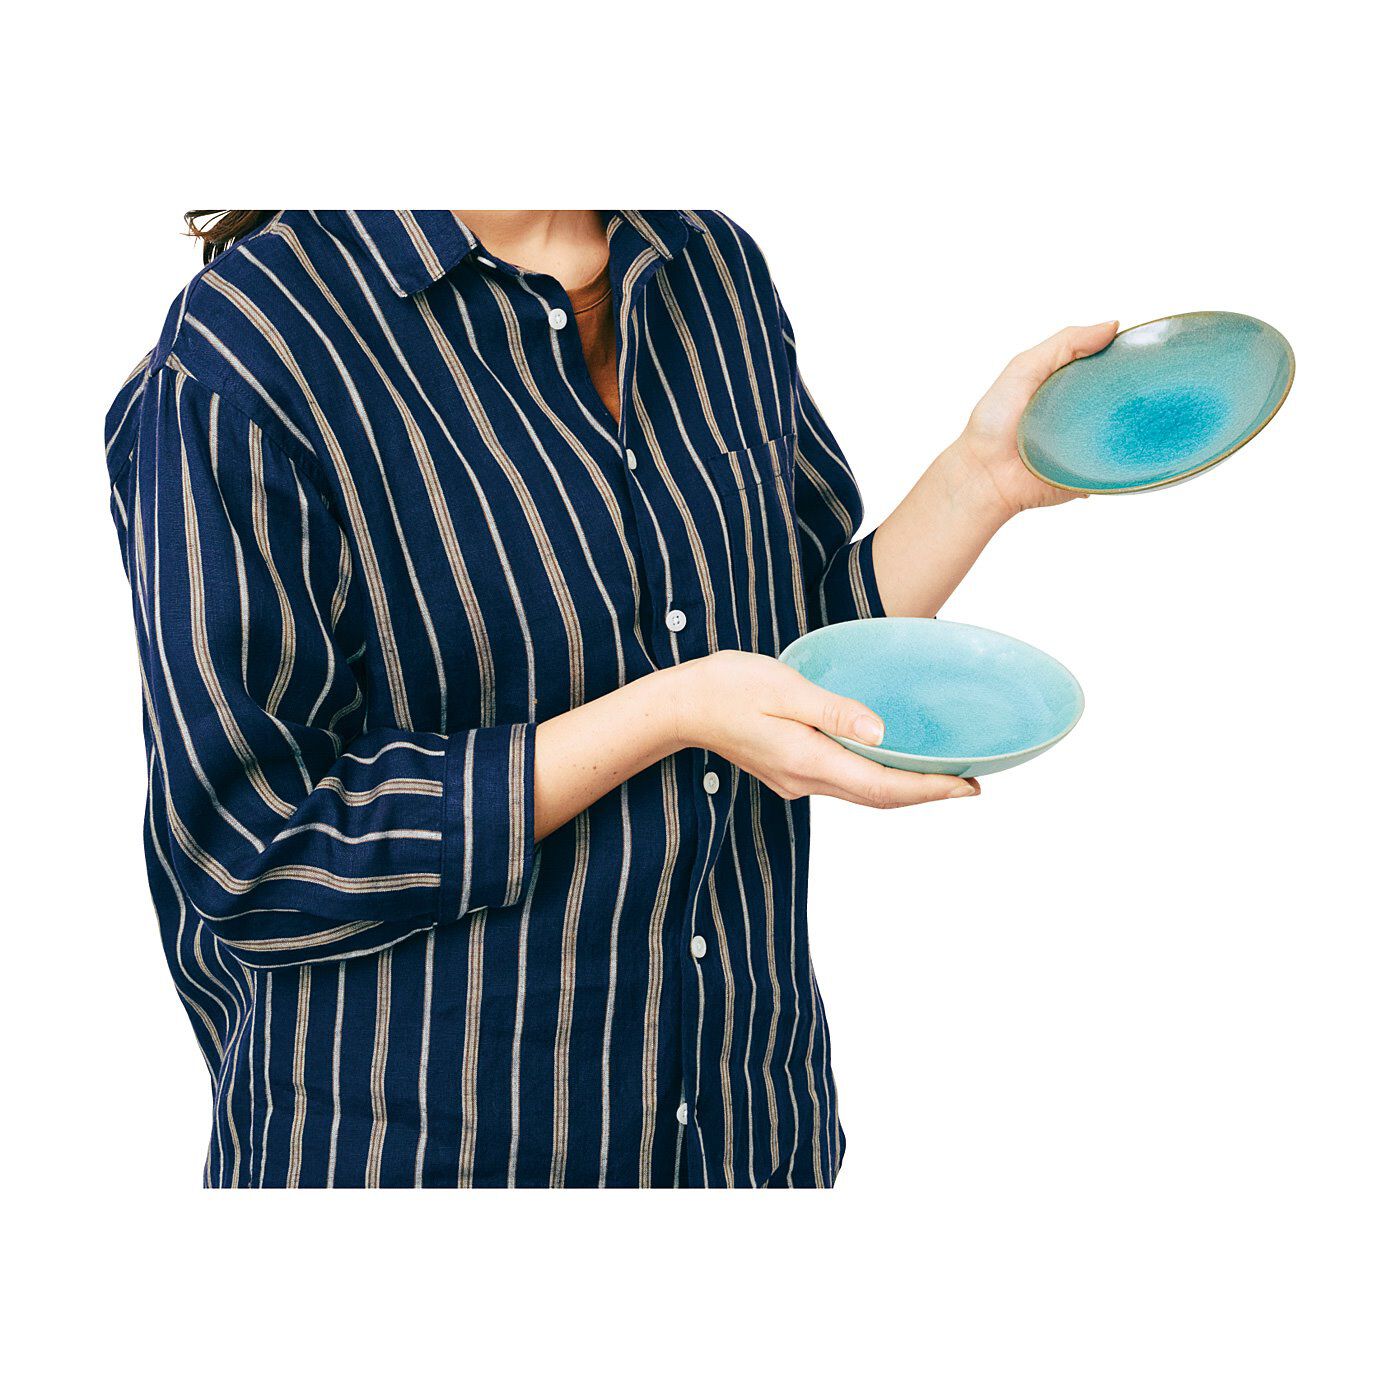 USEDo|ブルーガラス釉（ゆう）の変化を楽しむ　信楽焼の味わい深い青色小皿の会